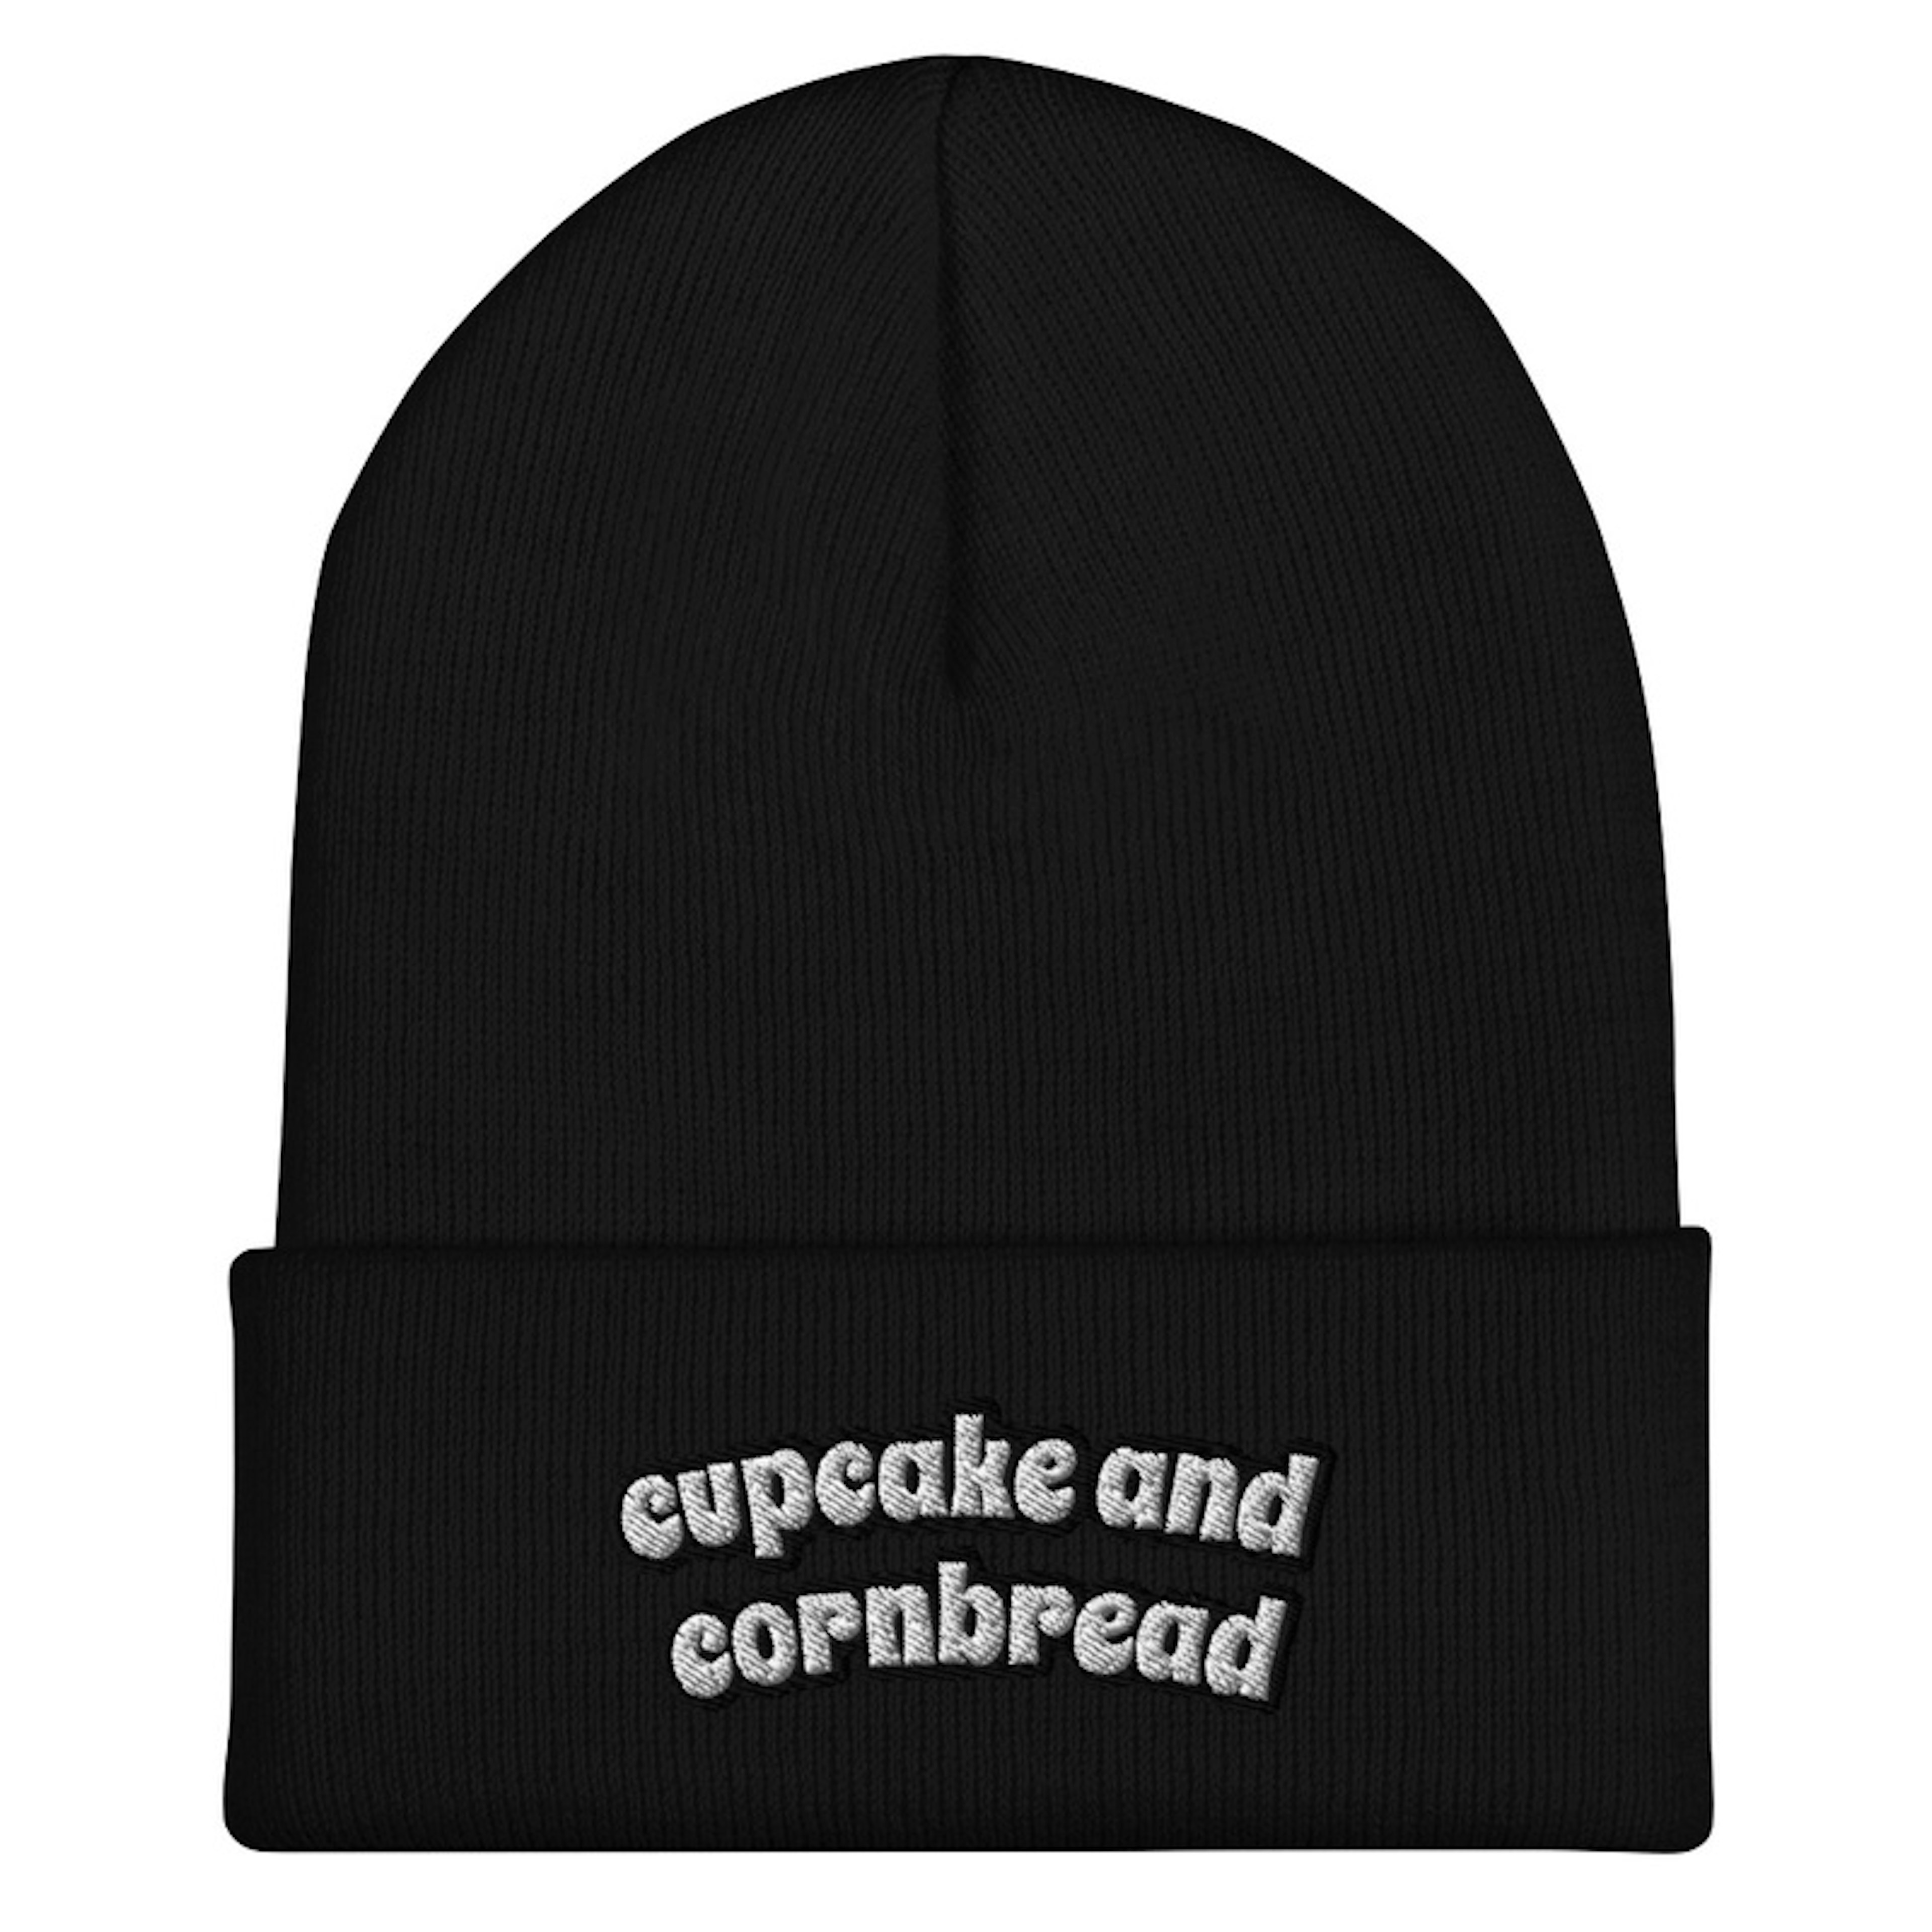 cupcake and cornbread beanie